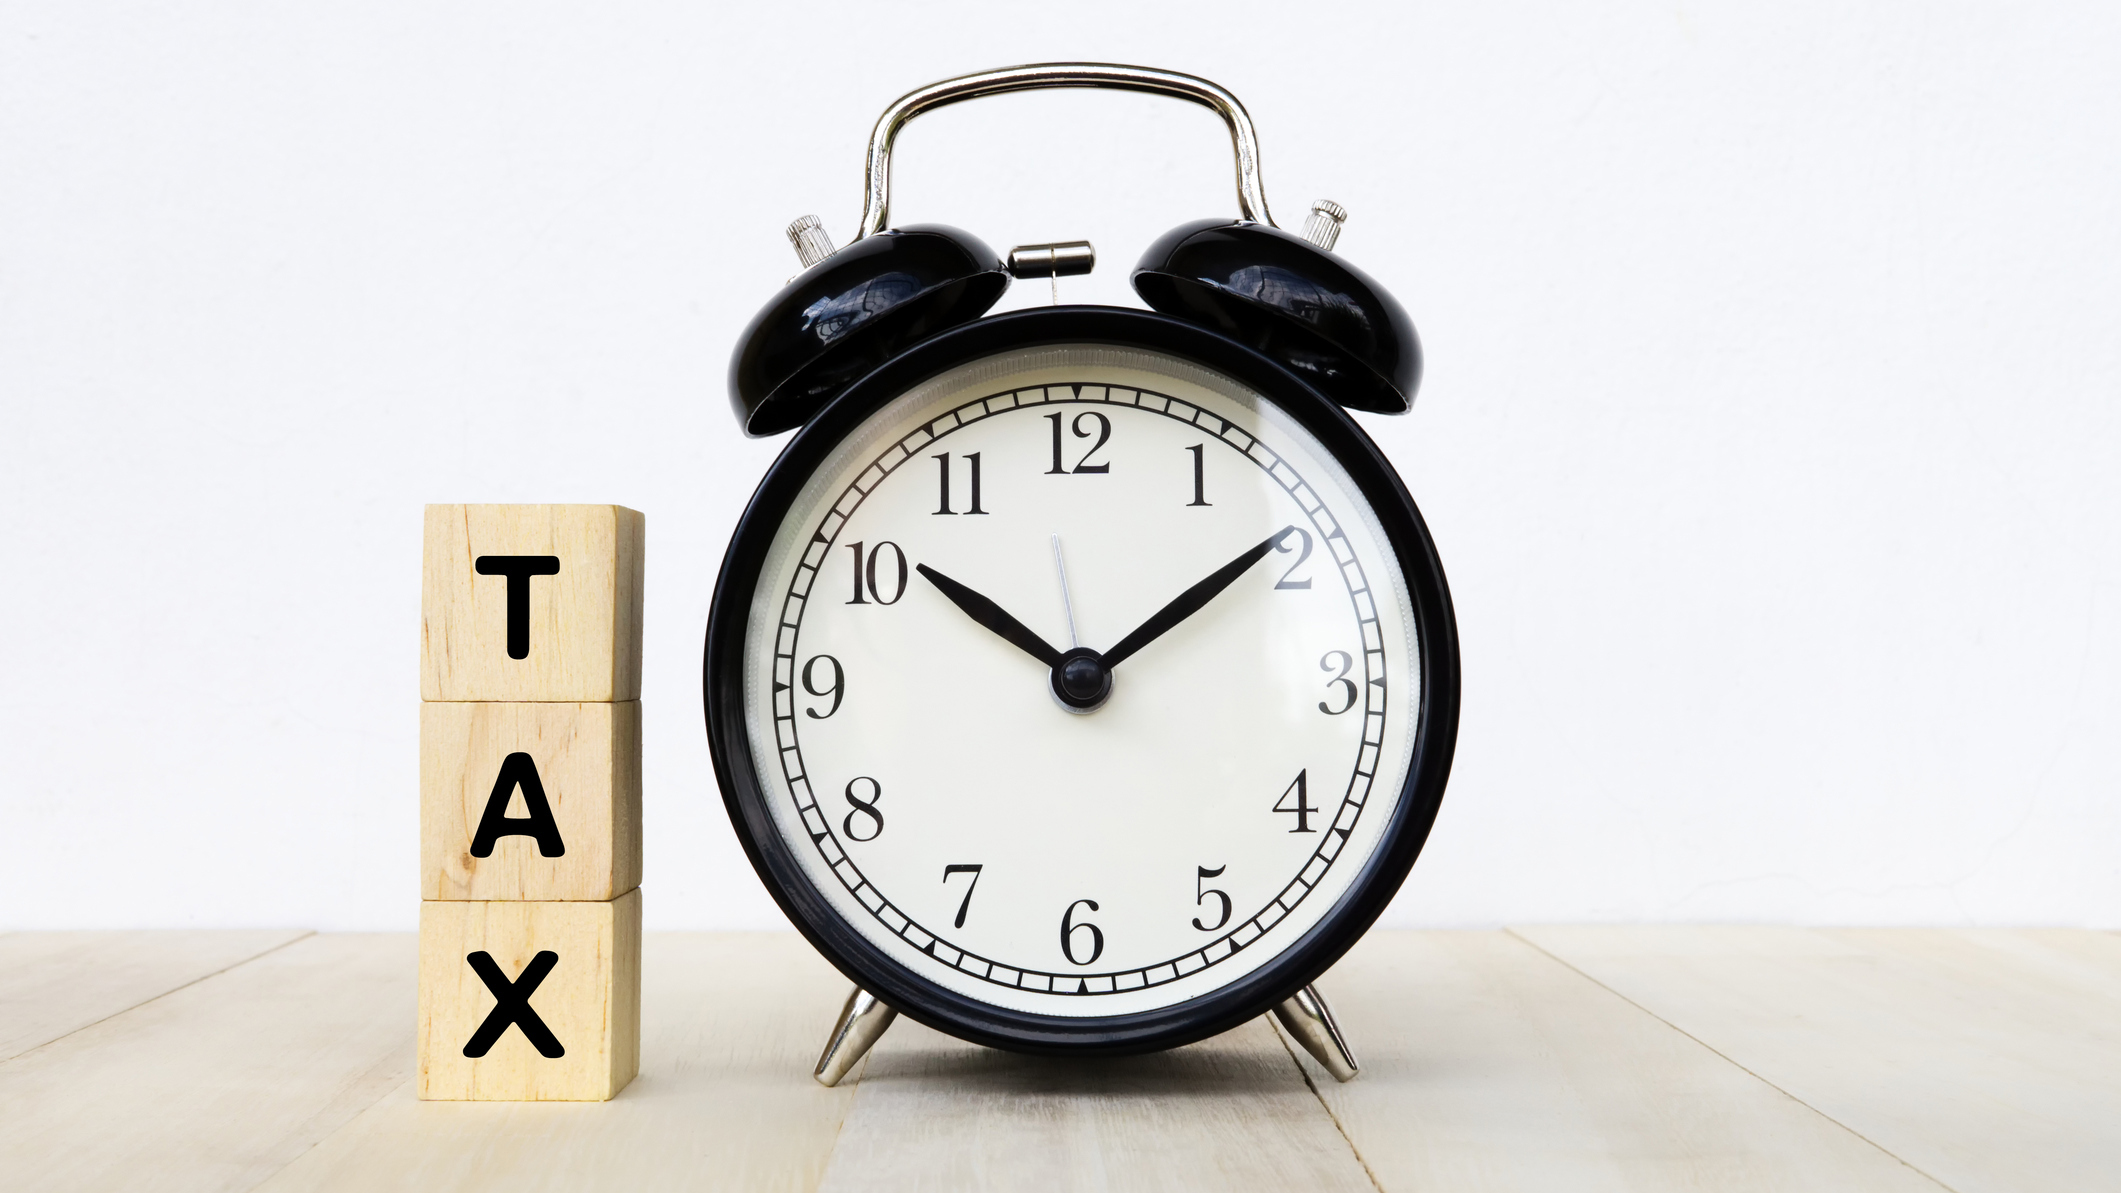 Tax alarm clock